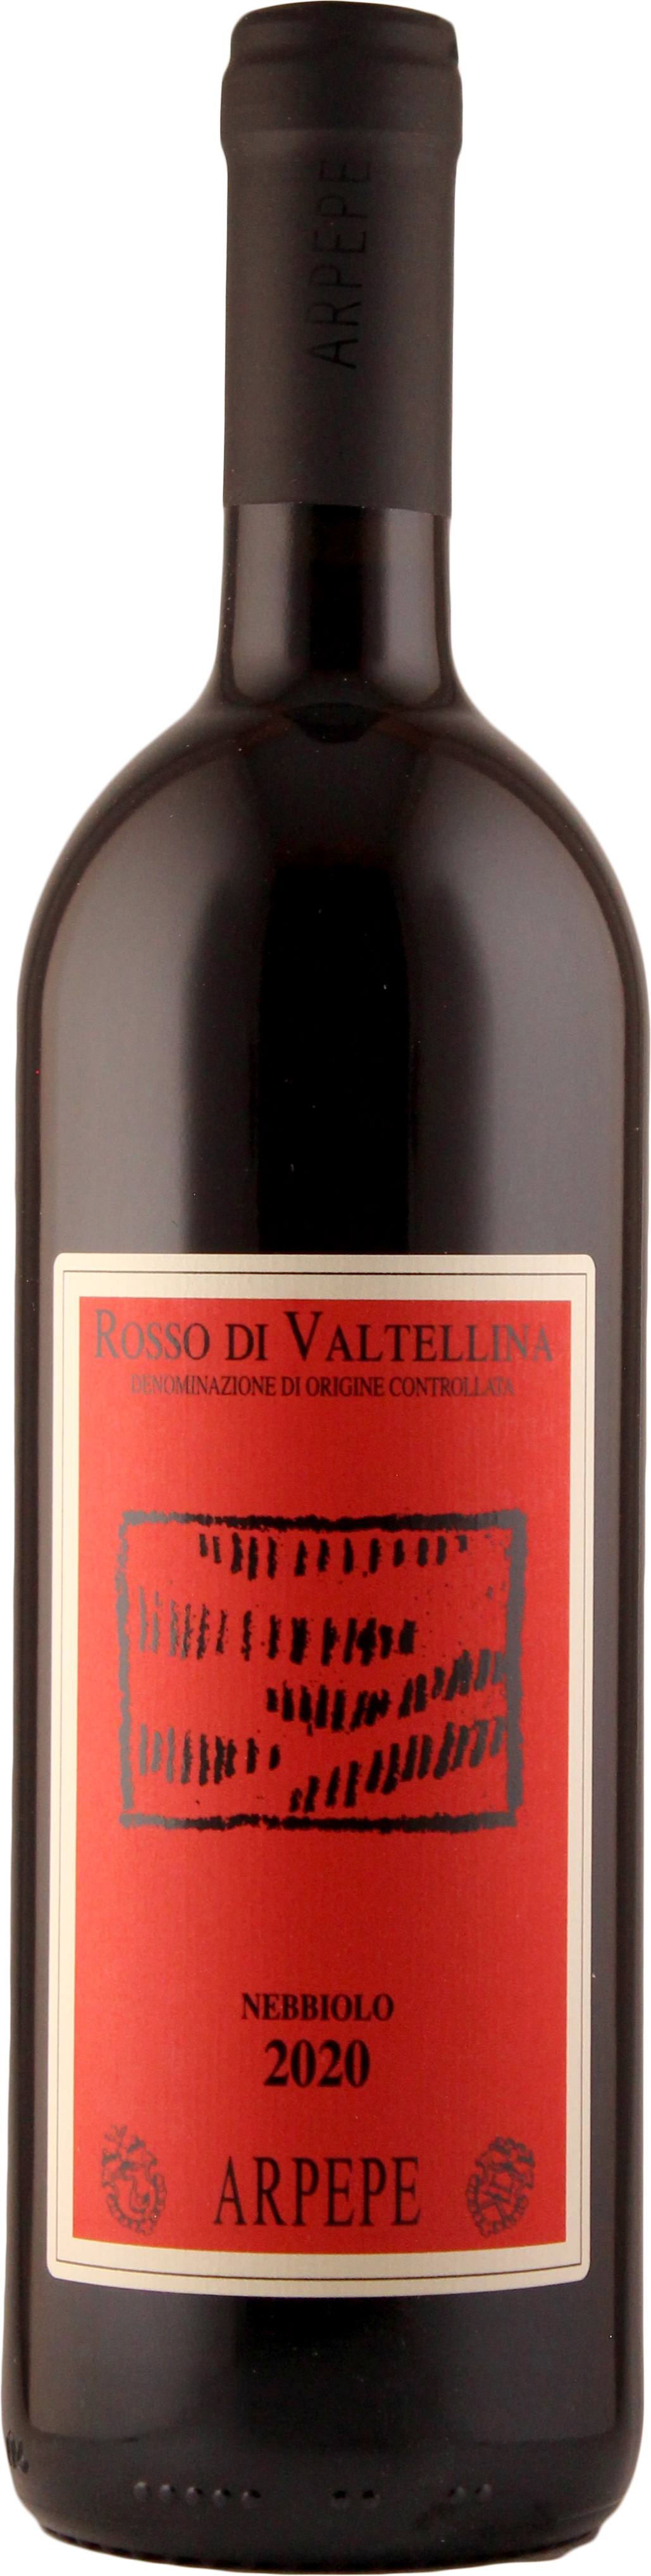 Rosso di Valtellina 2020 - Ar.Pe.Pe./Lombardei